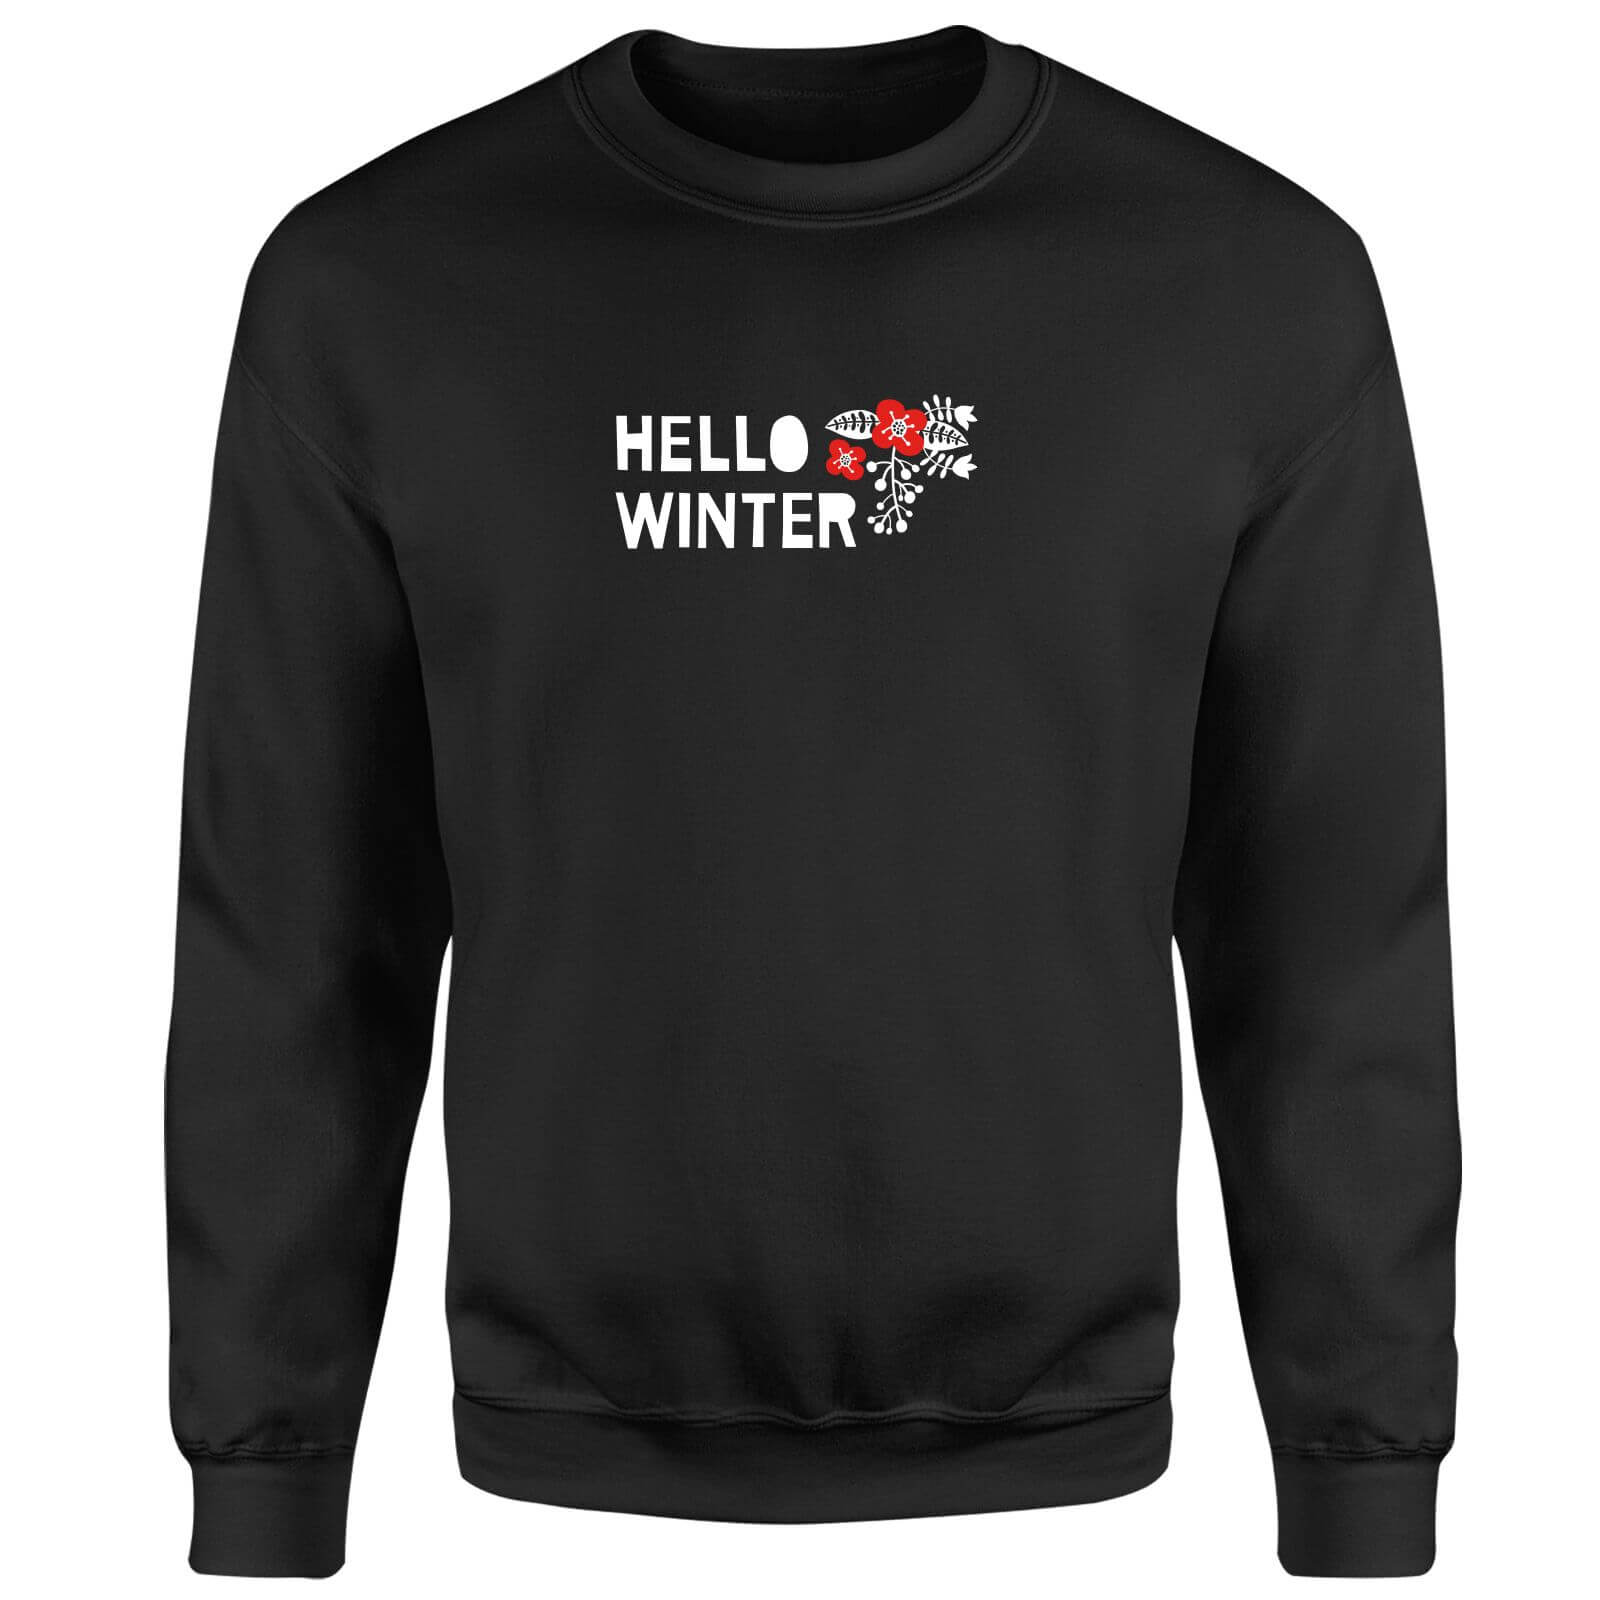 Hello Winter Sweatshirt - Black - S - Black